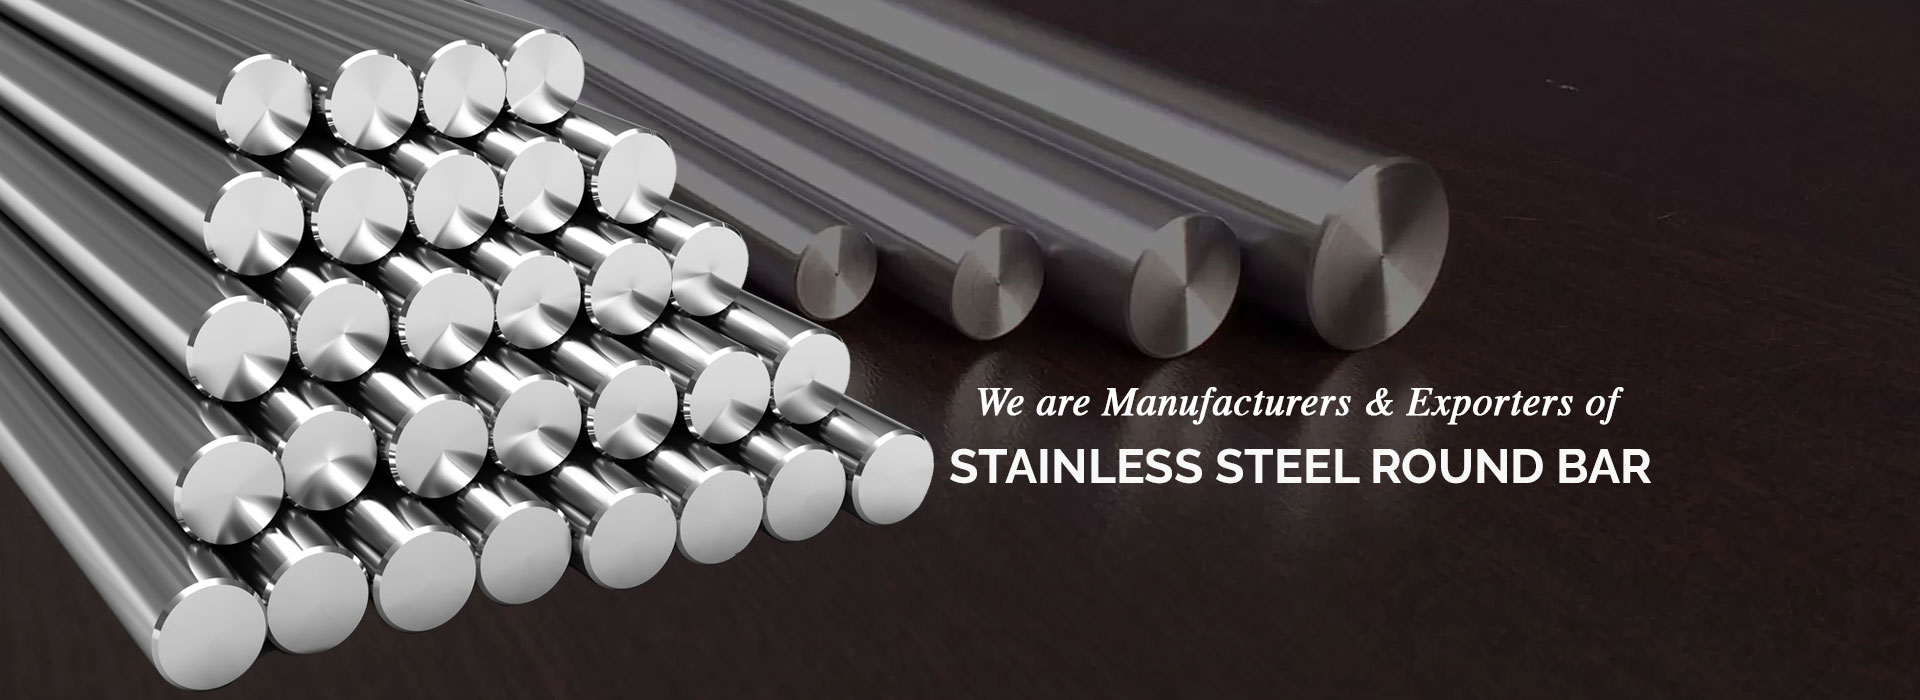 Stainless Steel Round Bar Manufacturers in Iran